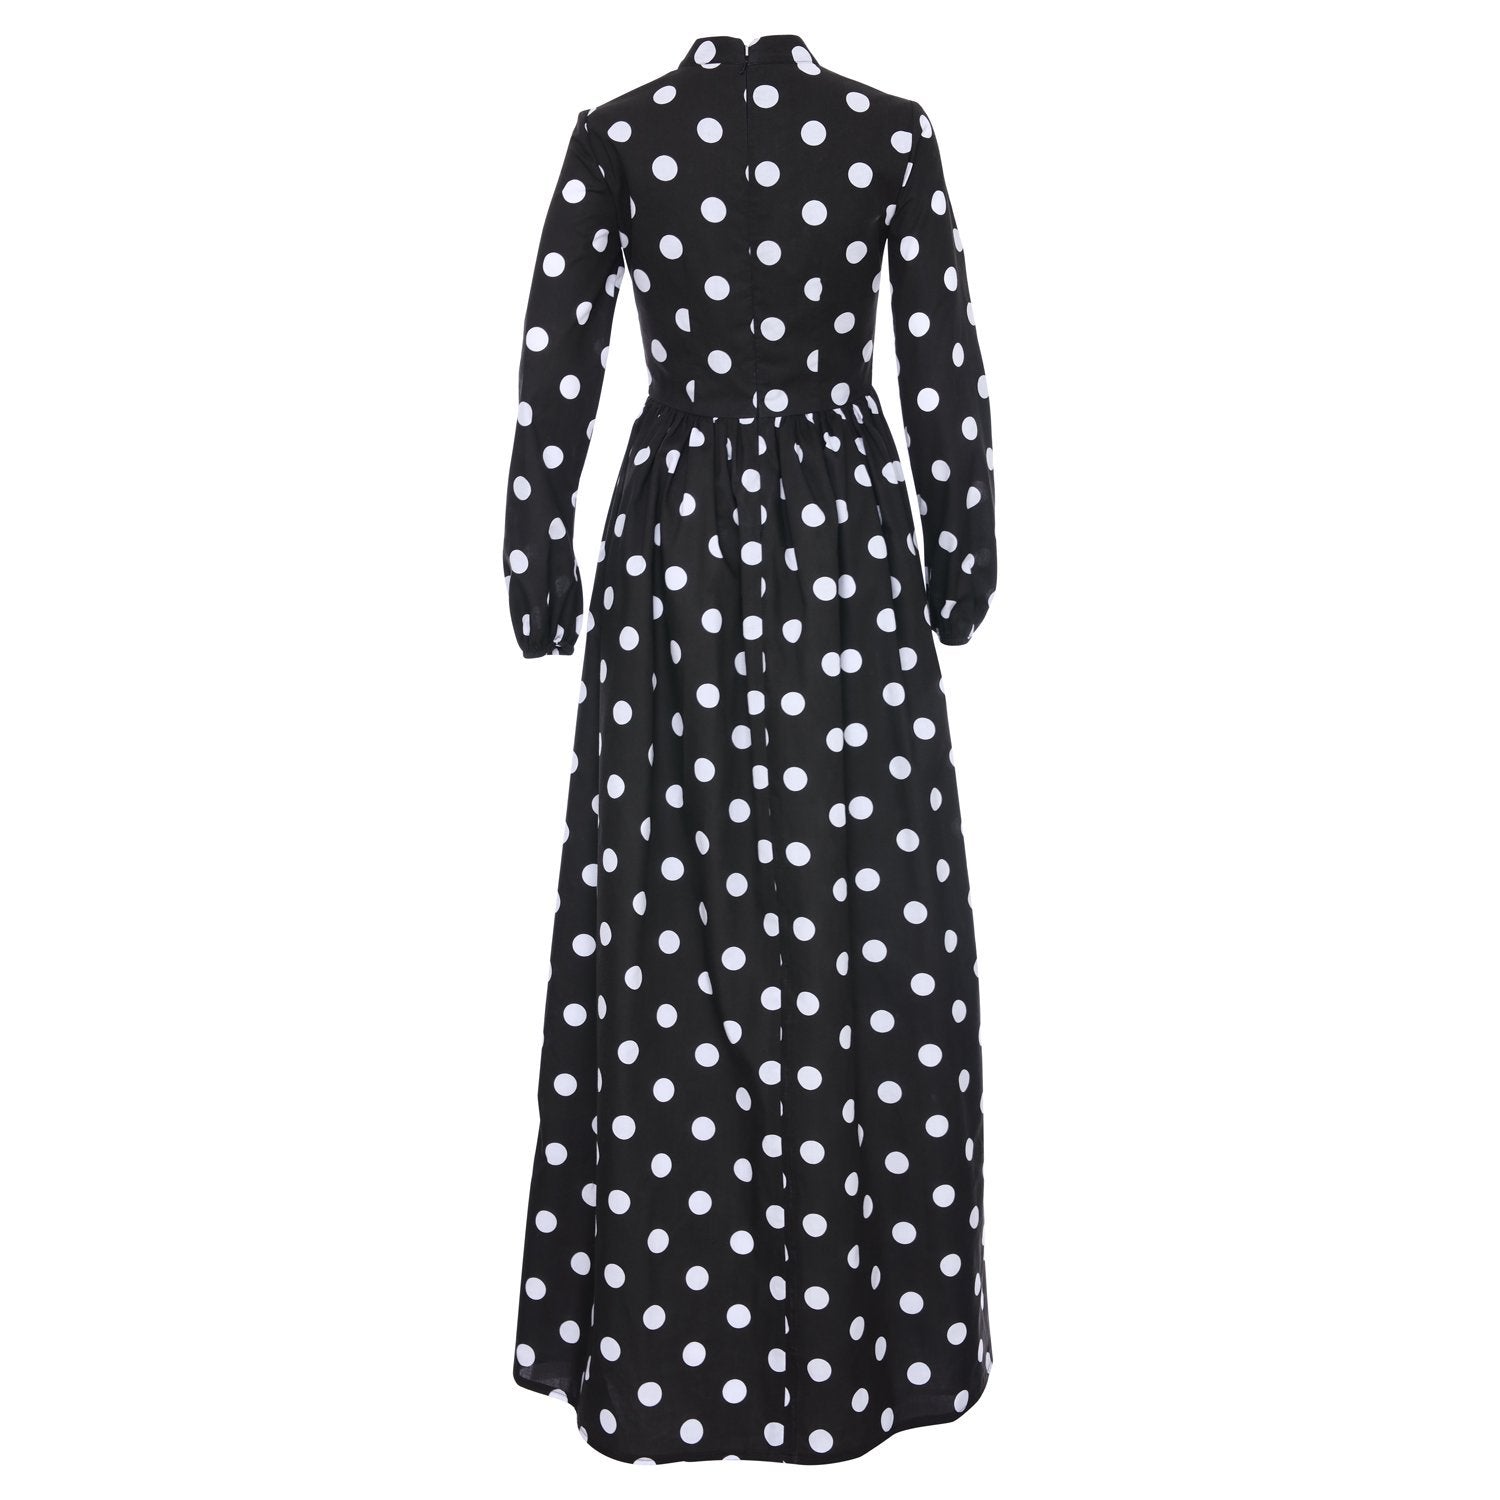 Monique Black Polka Dot Maxi - Dress Only